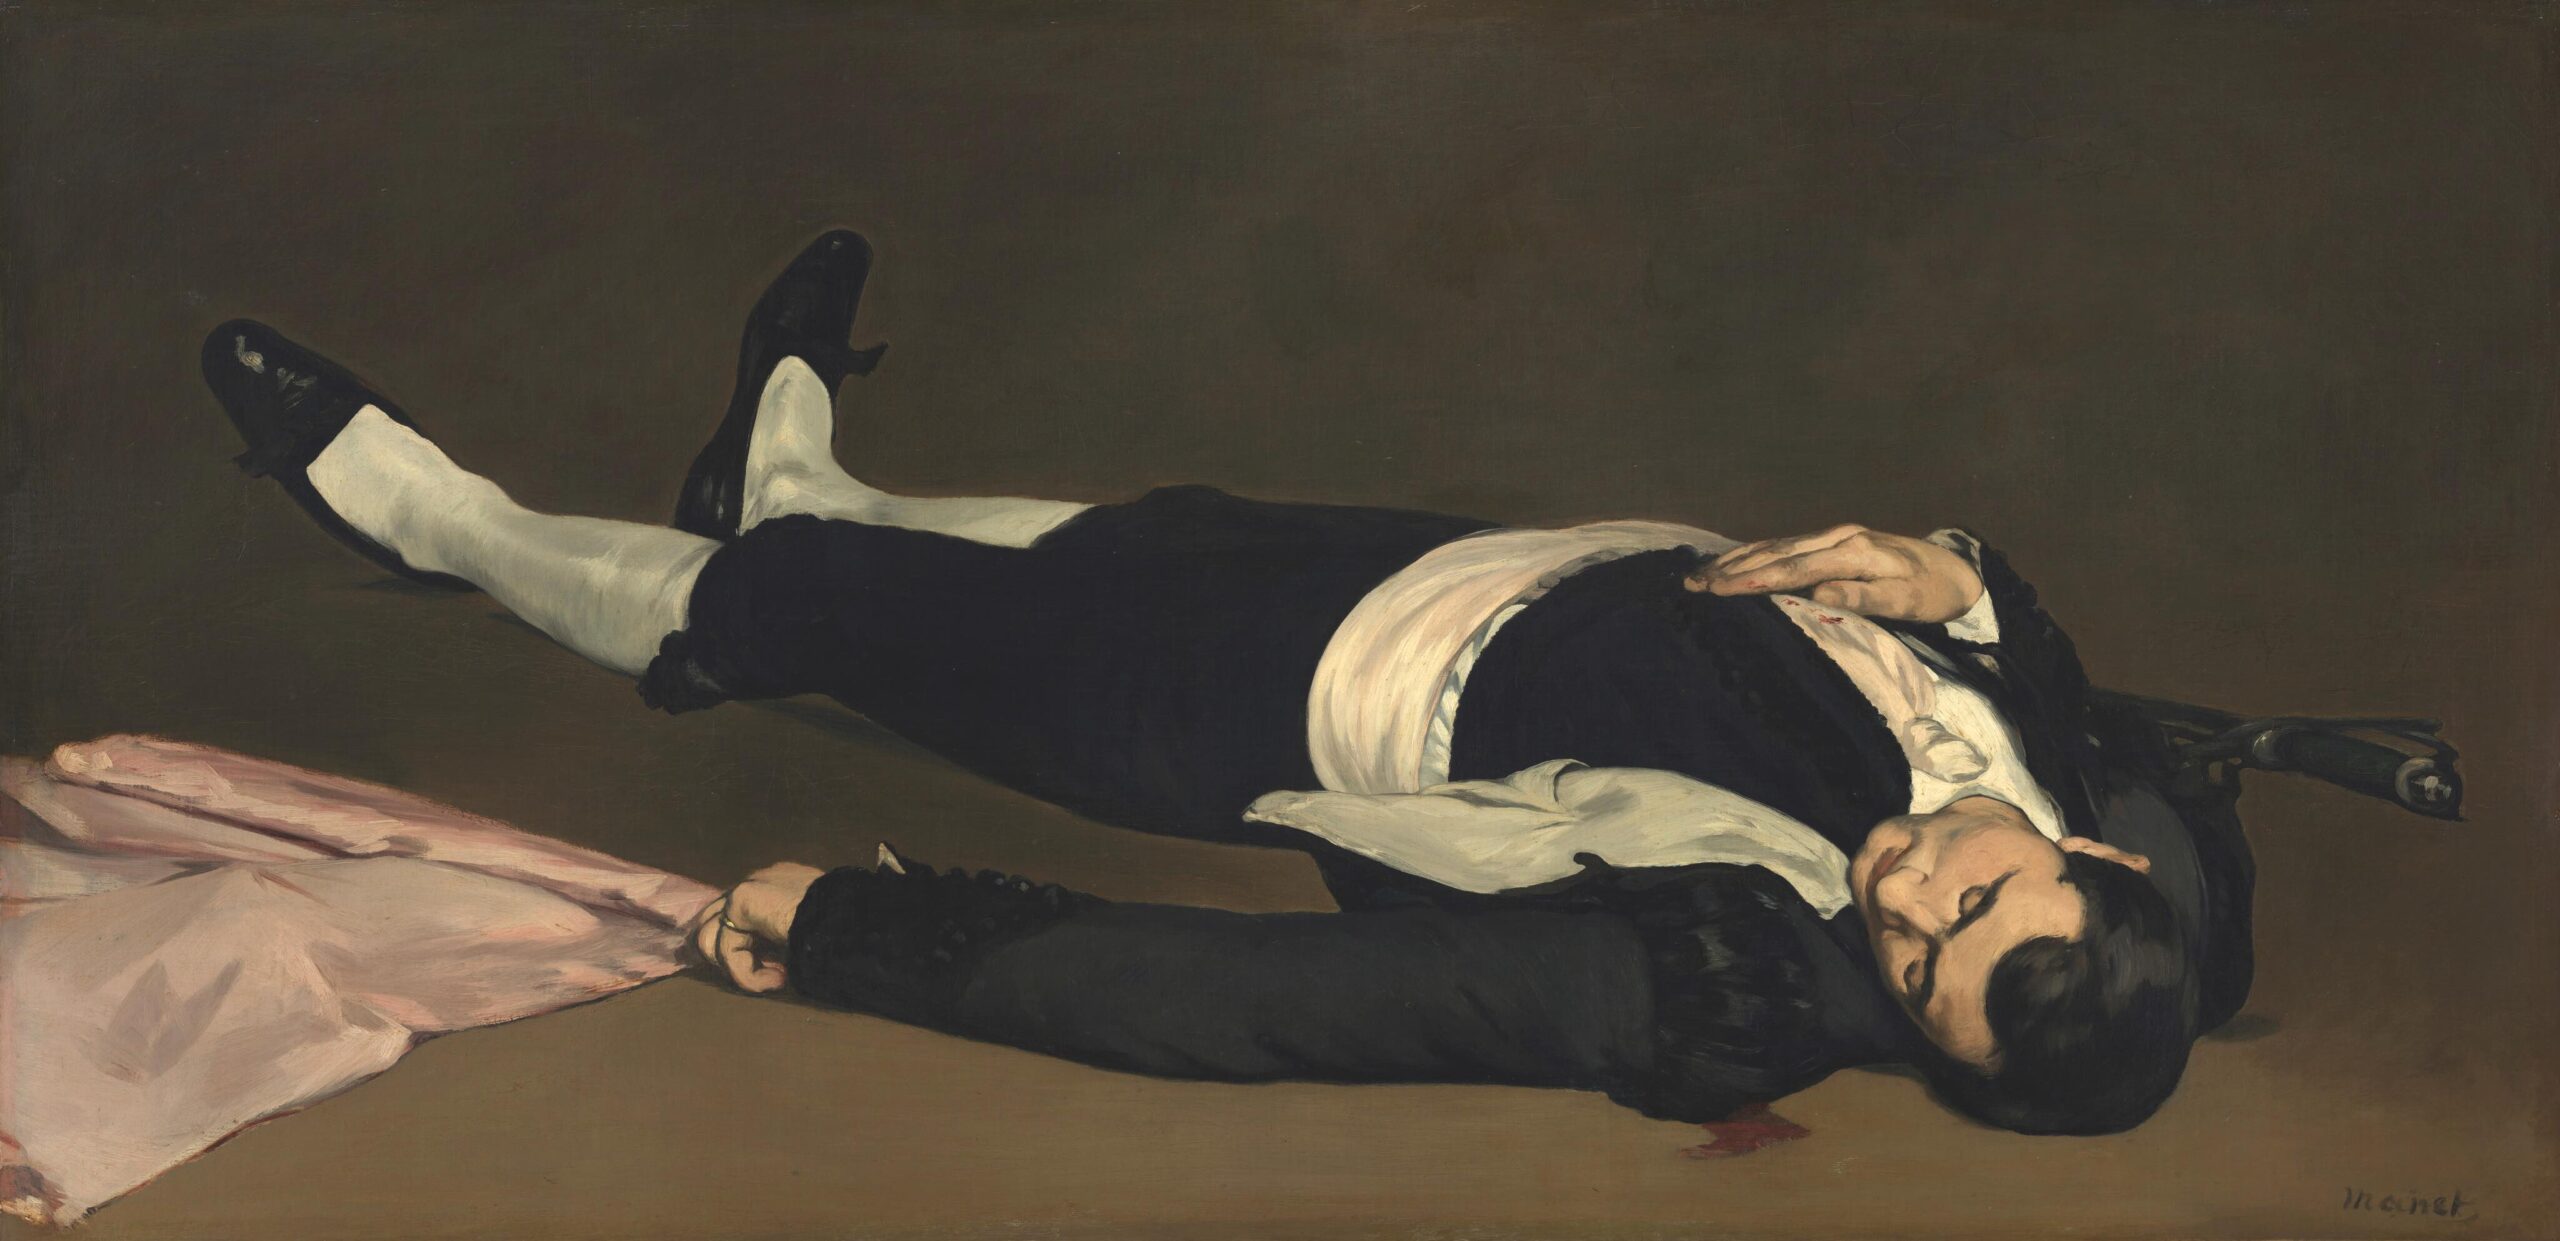 Édouard Manet (1832-1883), L’Homme mort [dit aussi Le Torero mort], 1864 Huile sur toile, 75,9 x 153,3 cm. Washington, National Gallery of Art Photo courtesy The National Gallery of Art, Washington
